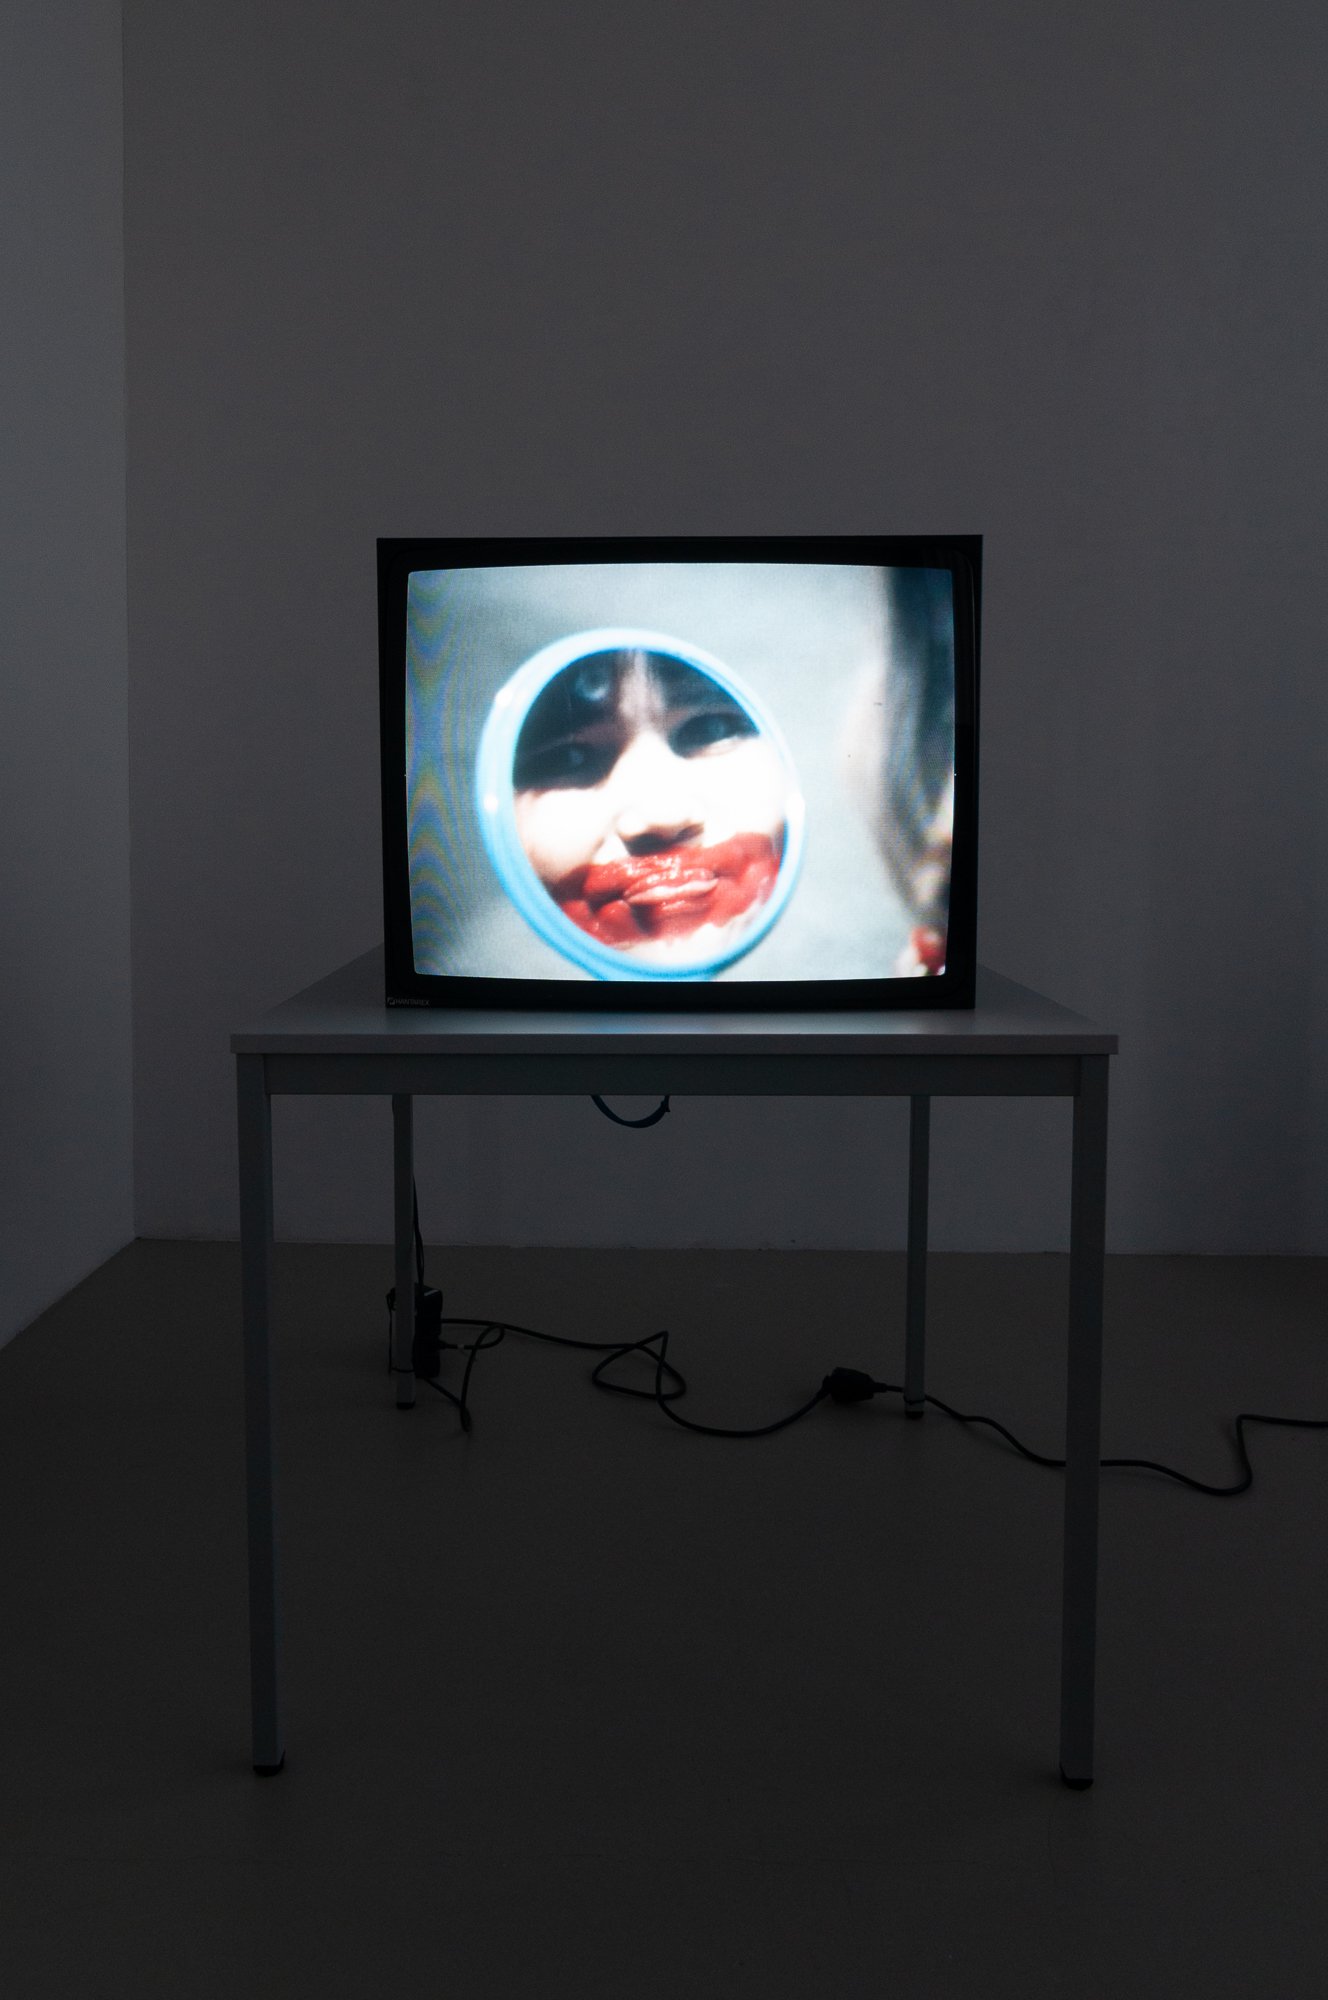 Leslie Thornton, Jennifer, Where Are You?, still, 16 mm film on video, colour, sound, 10 min. 42 sec., 1981. Installation view, GROUND, Kunstverein Nürnberg, Nürnberg, 2020